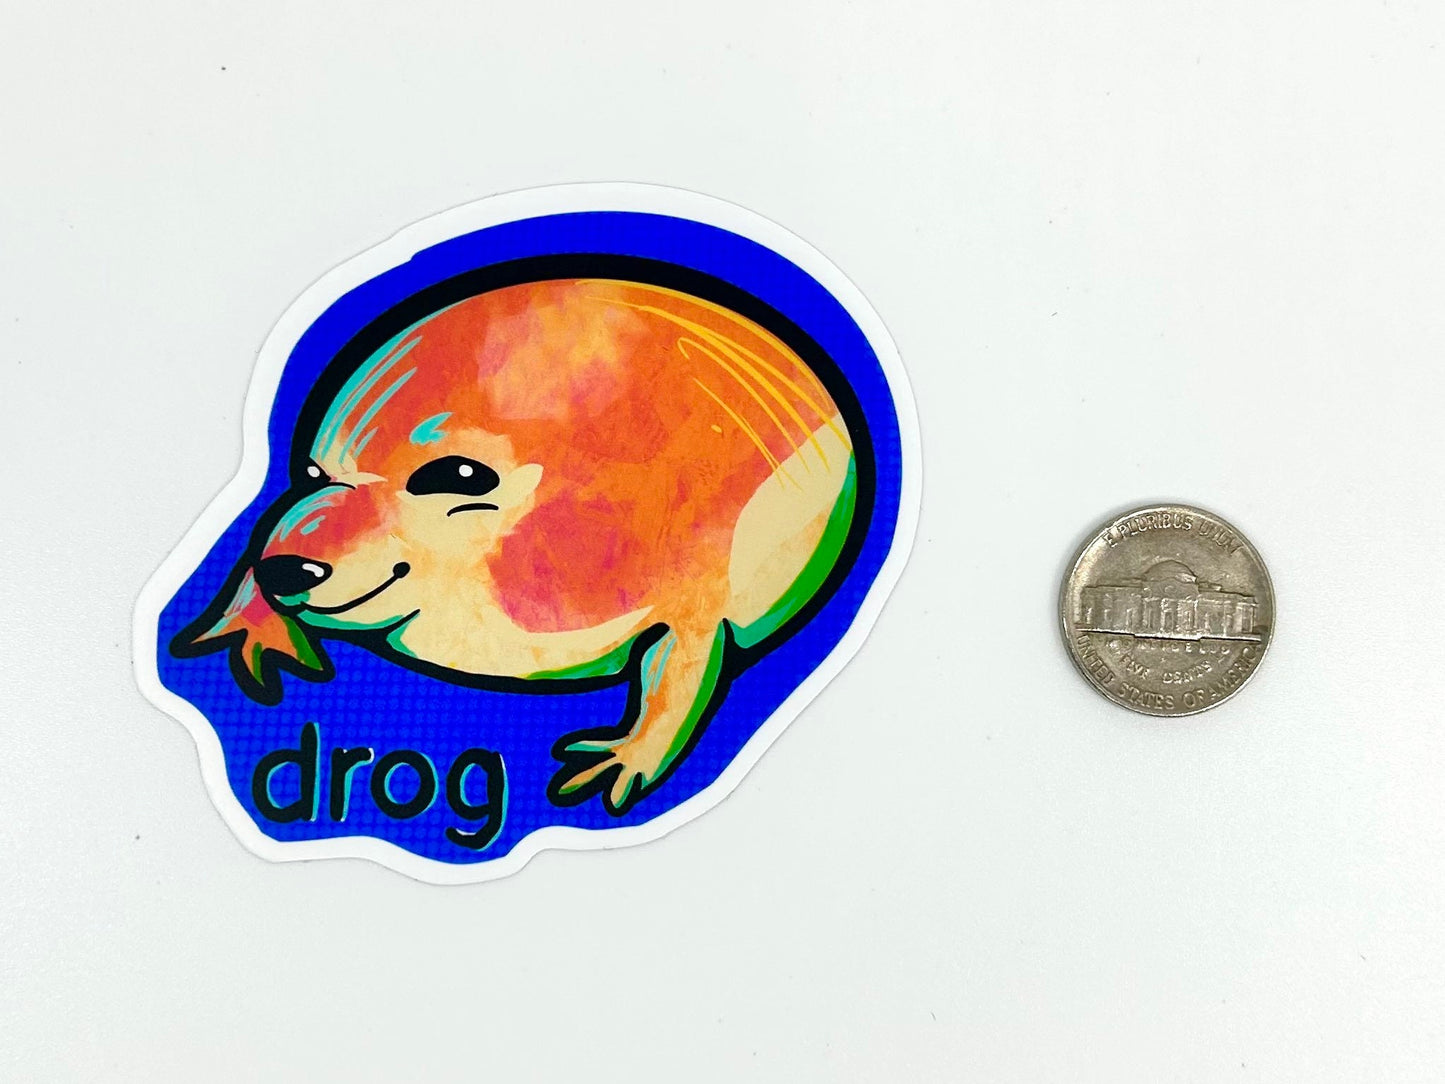 Weird 'Drog' Sticker - 3.5" Dog and Frog Meme Vinyl Decal, Quirky Laptop/Planner Decor